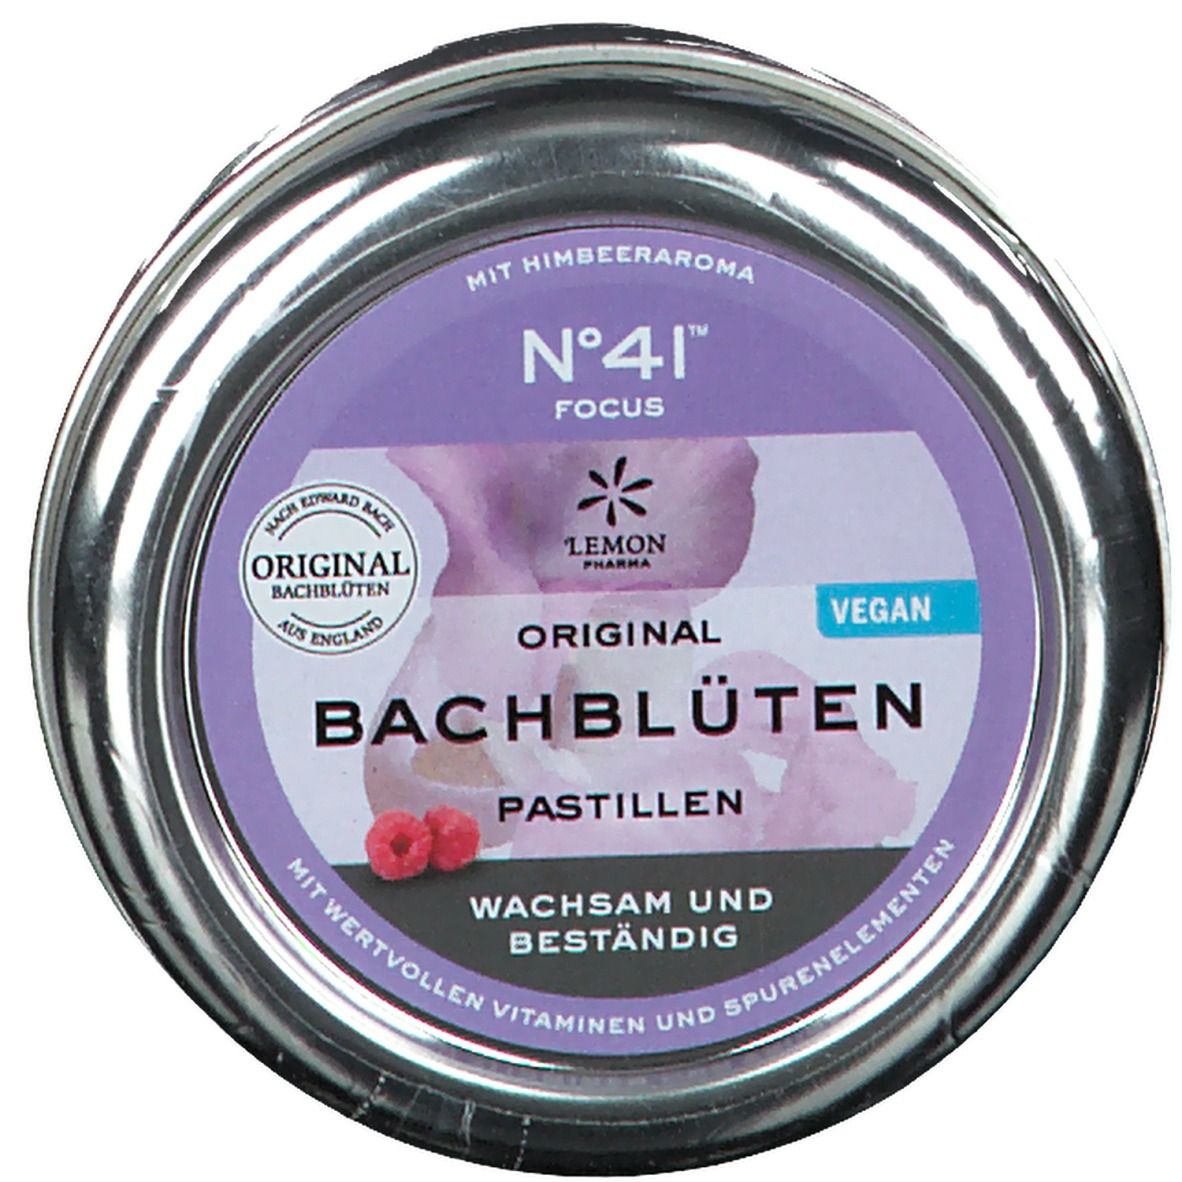 No. 41® Konzentration Original Bachblüten Pastillen